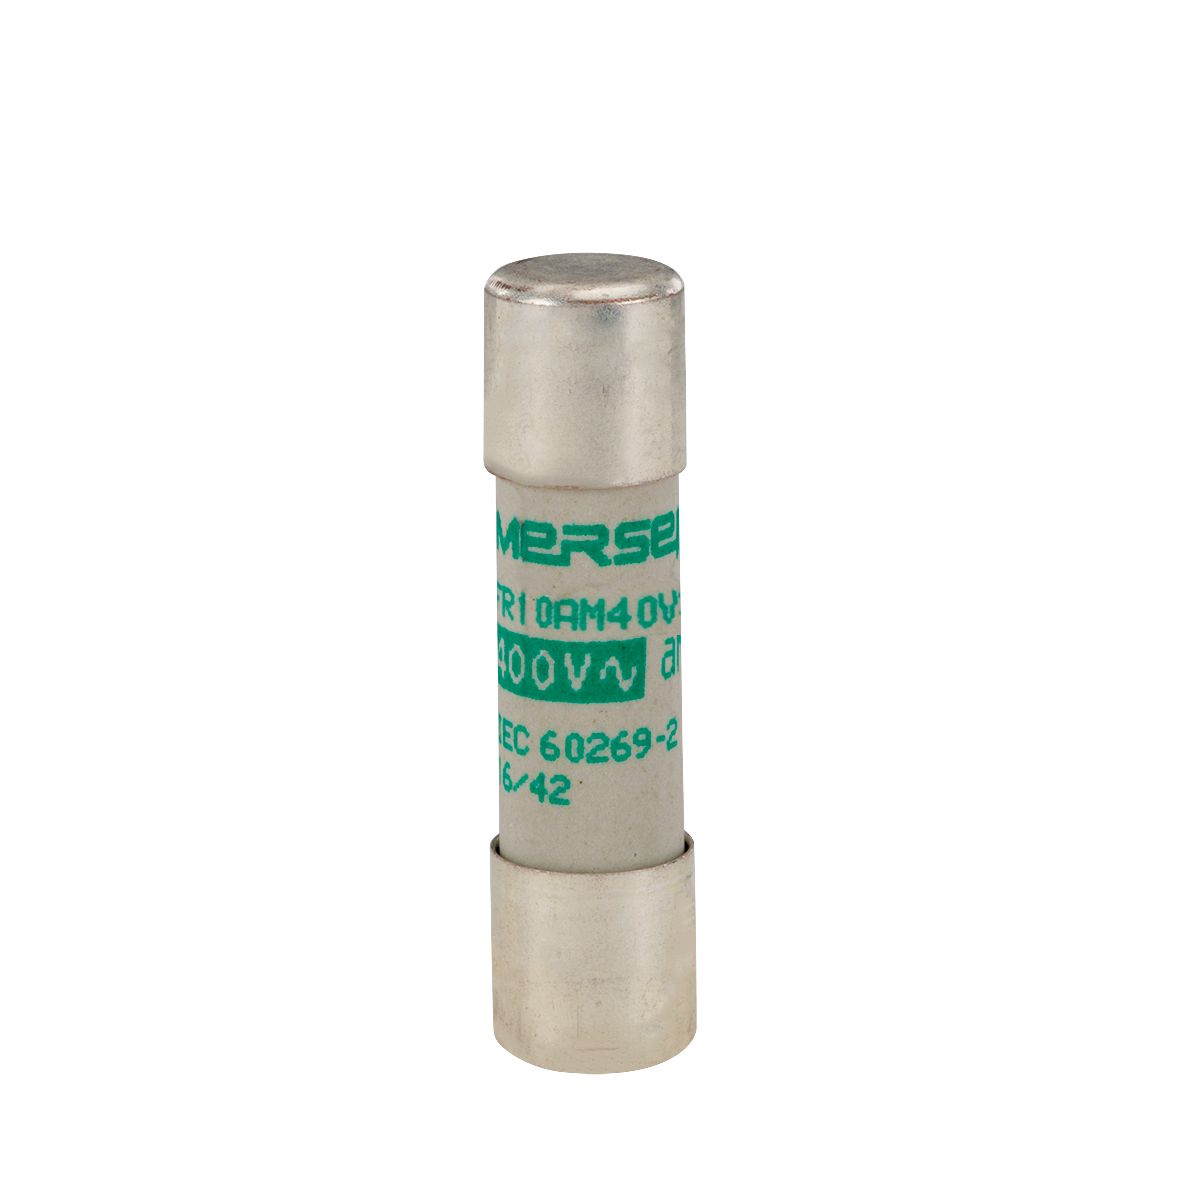 J218715 - Cylindrical fuse-link aM 400VAC 10.3x38, 32A